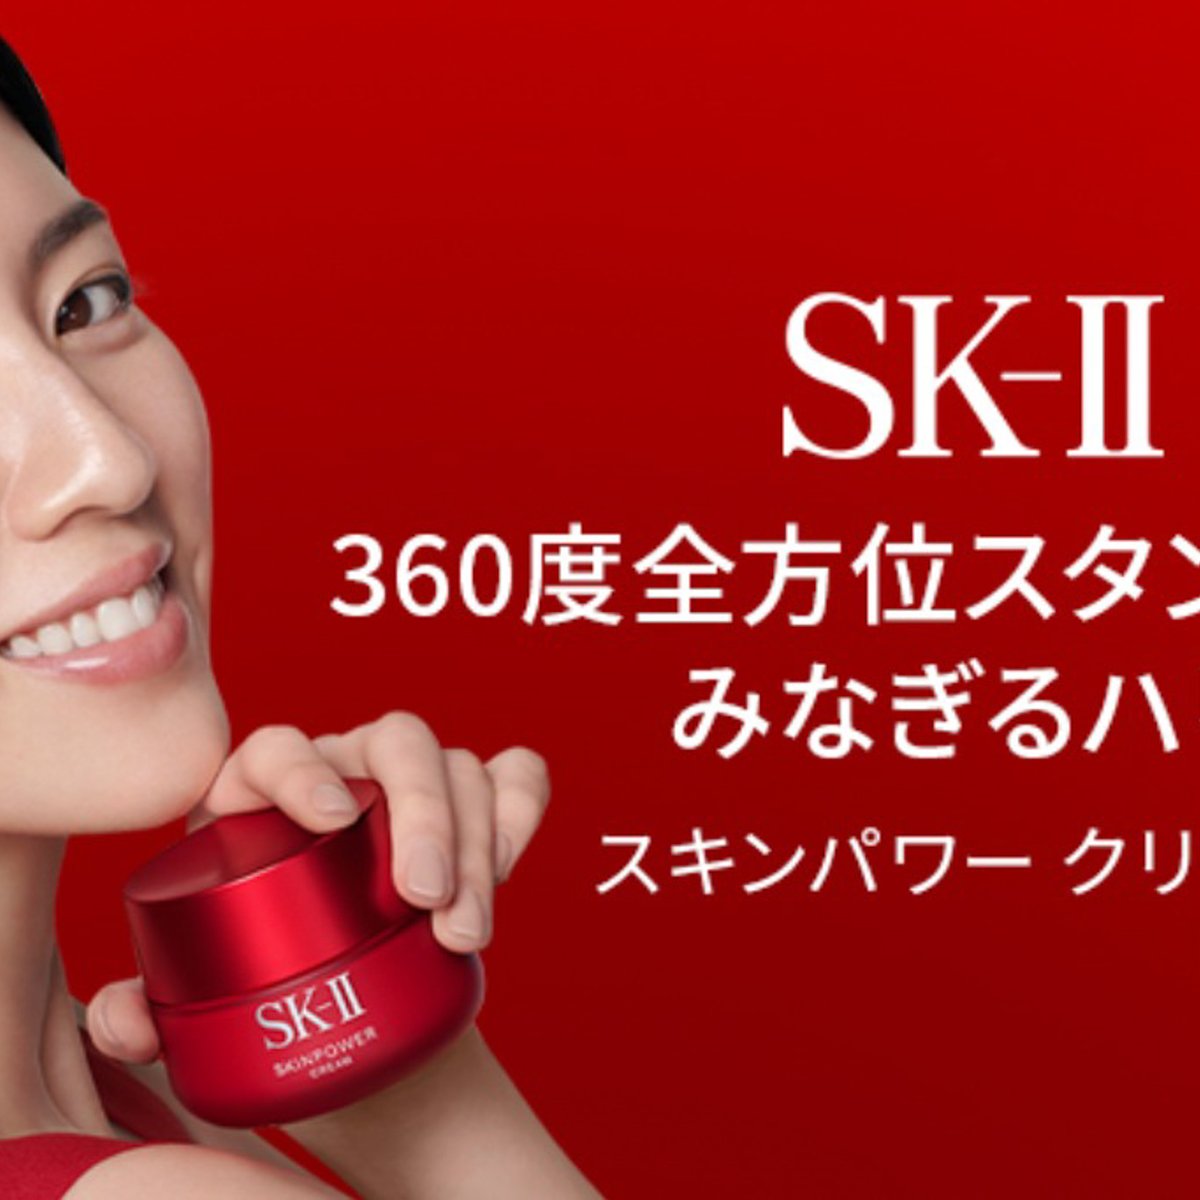 SK-IIスキンパワークリーム80G - 基礎化粧品